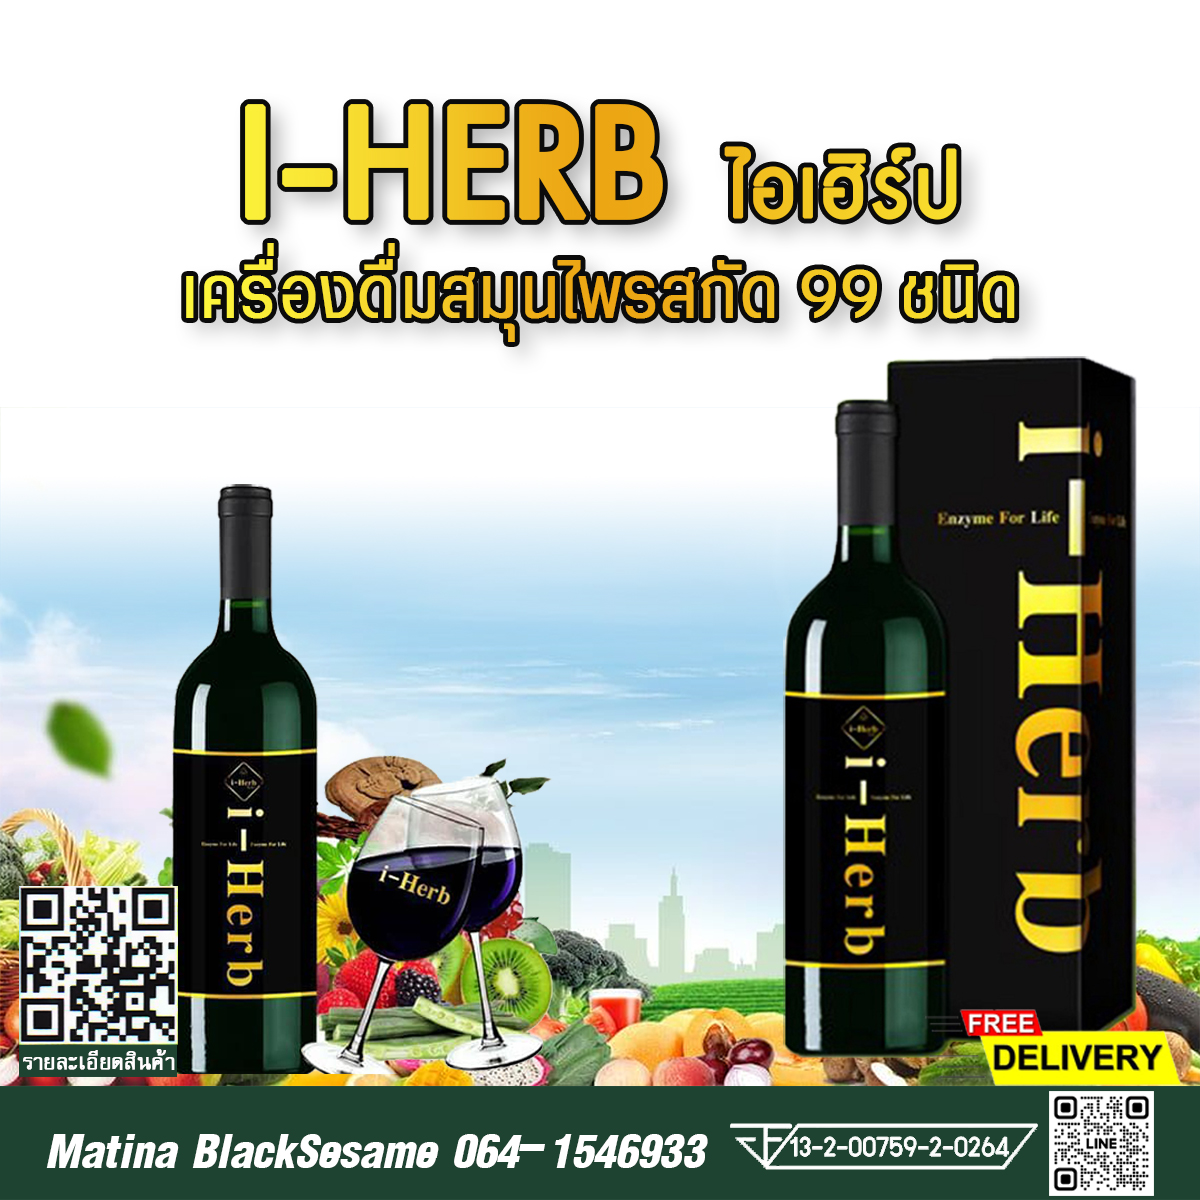 I-HERB น้ำเอนไซม์สกัดจากผลไม้ ผักและธัญพืช 99 ชนิด